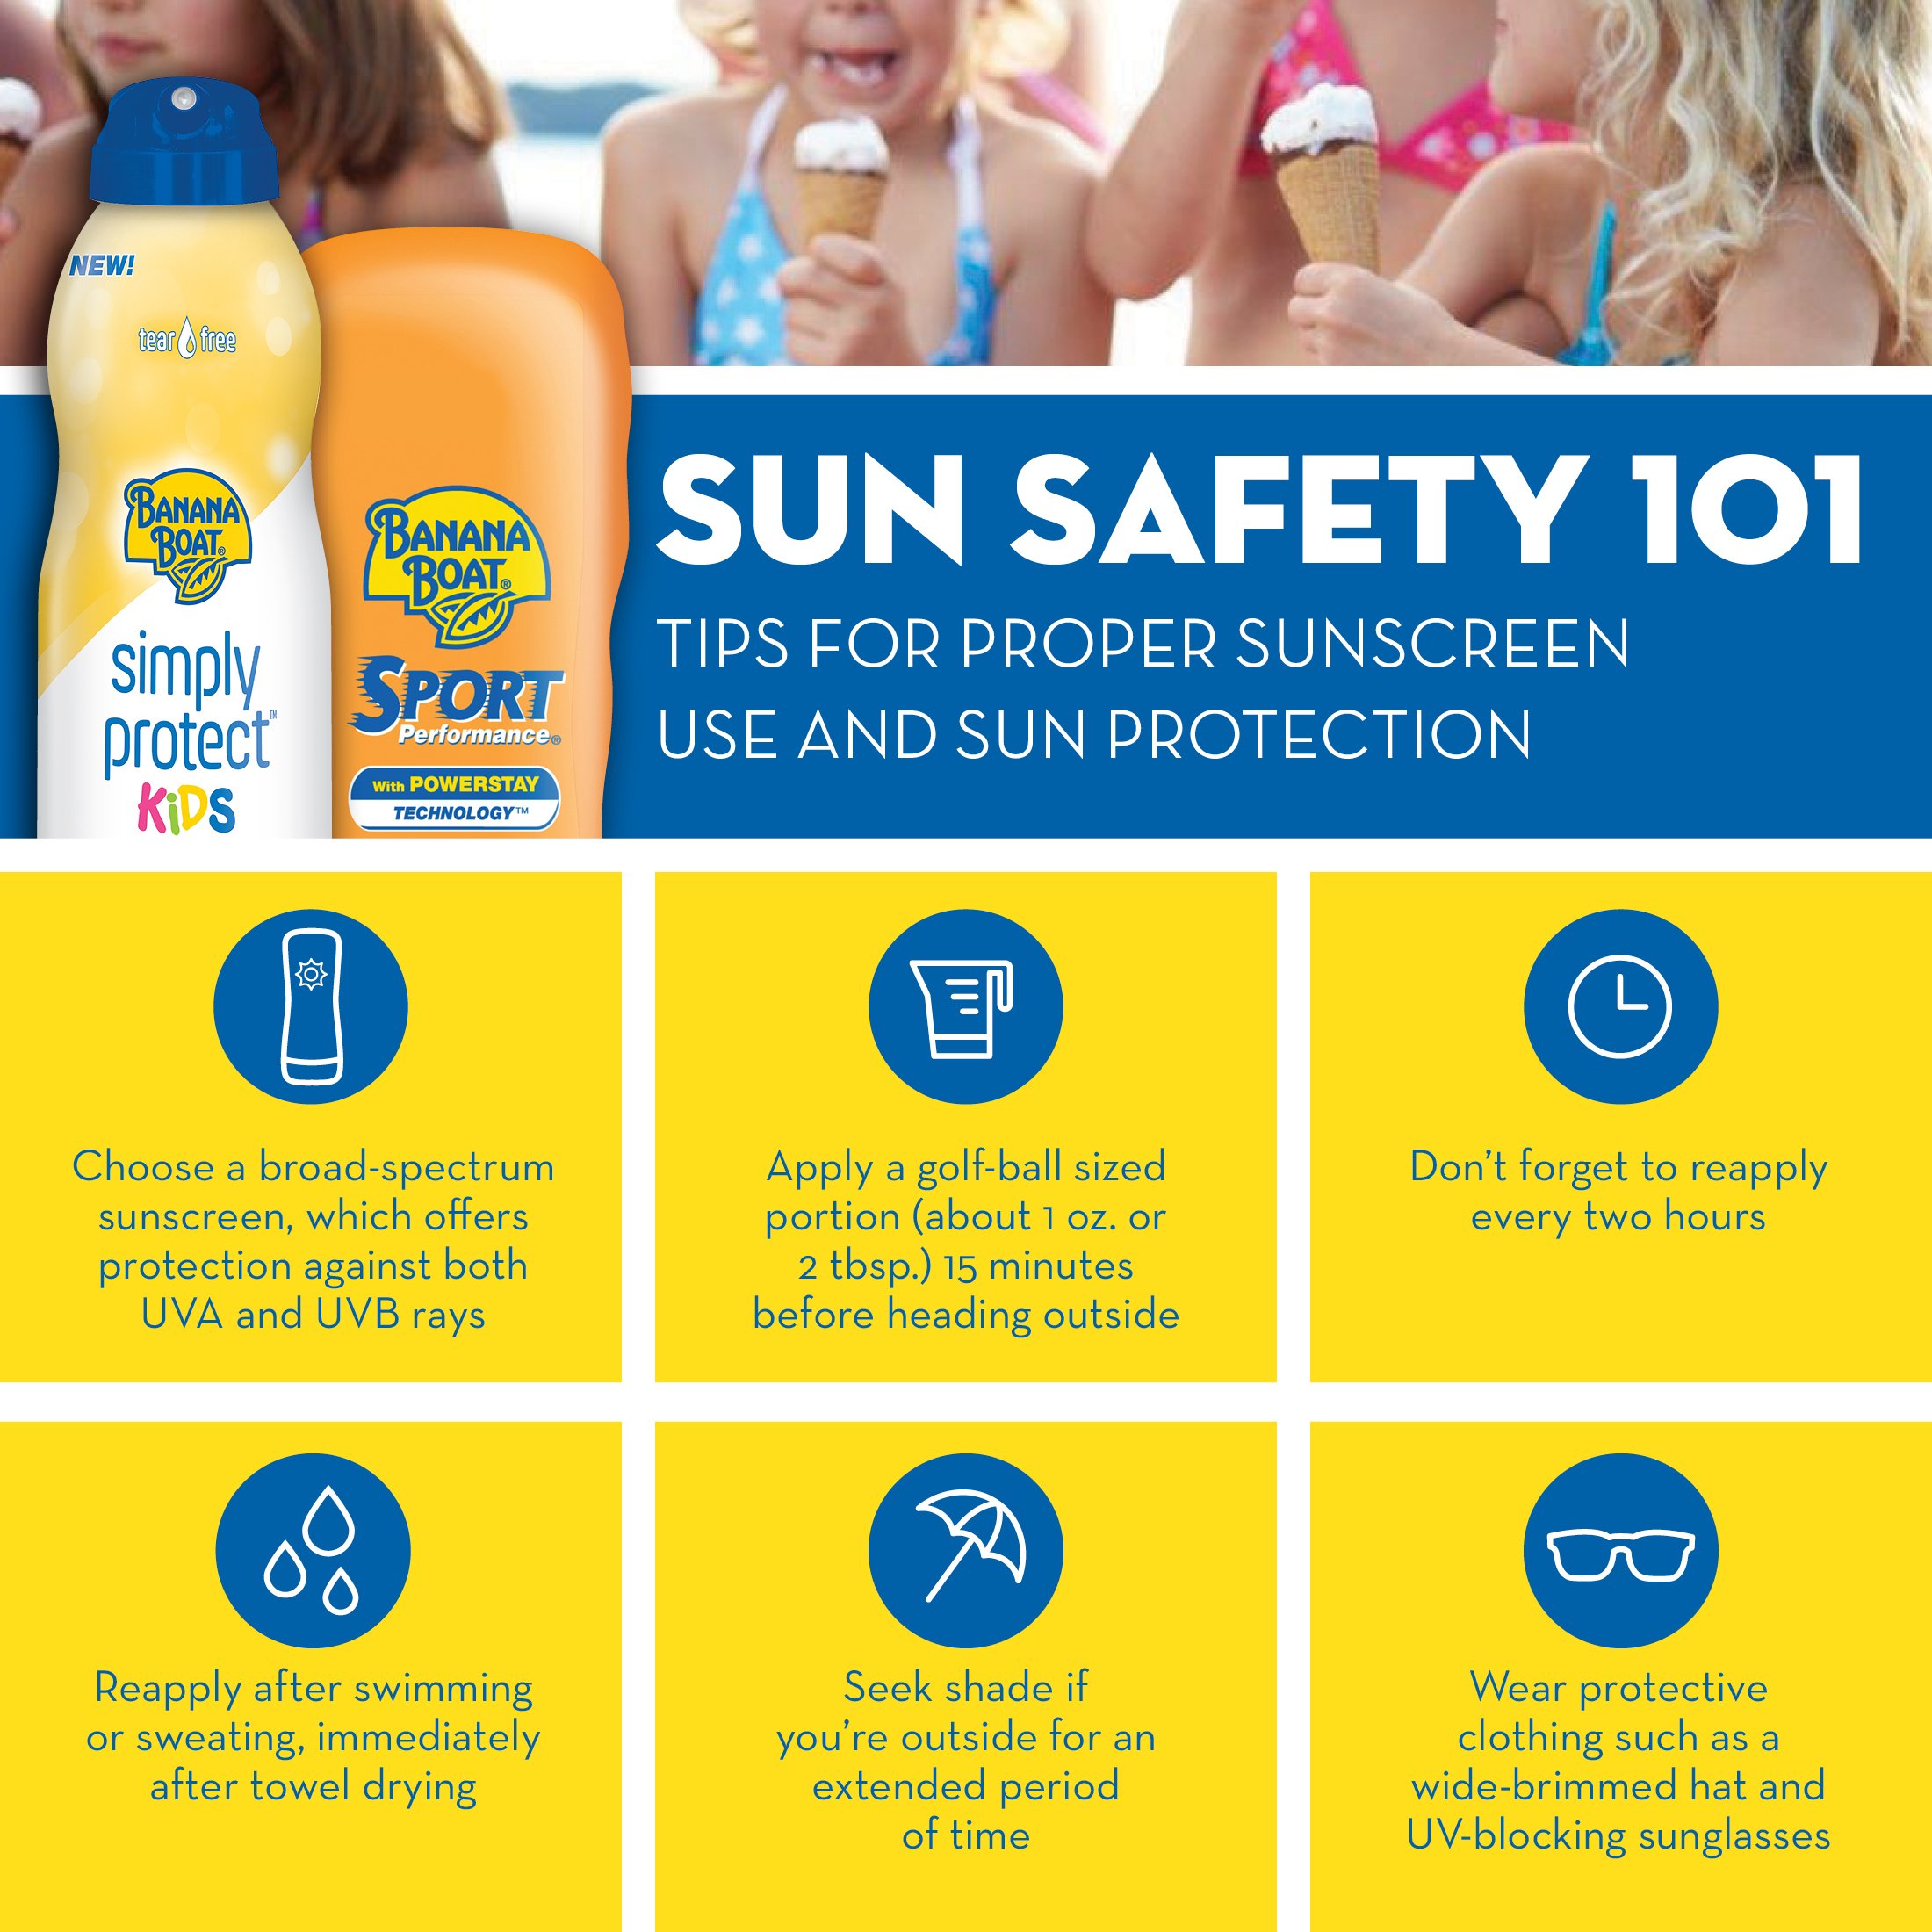 Banana Boat UltraMist Kids MAX Protect & Play Clear Spray Sunscreen SPF 100: 6 OZ